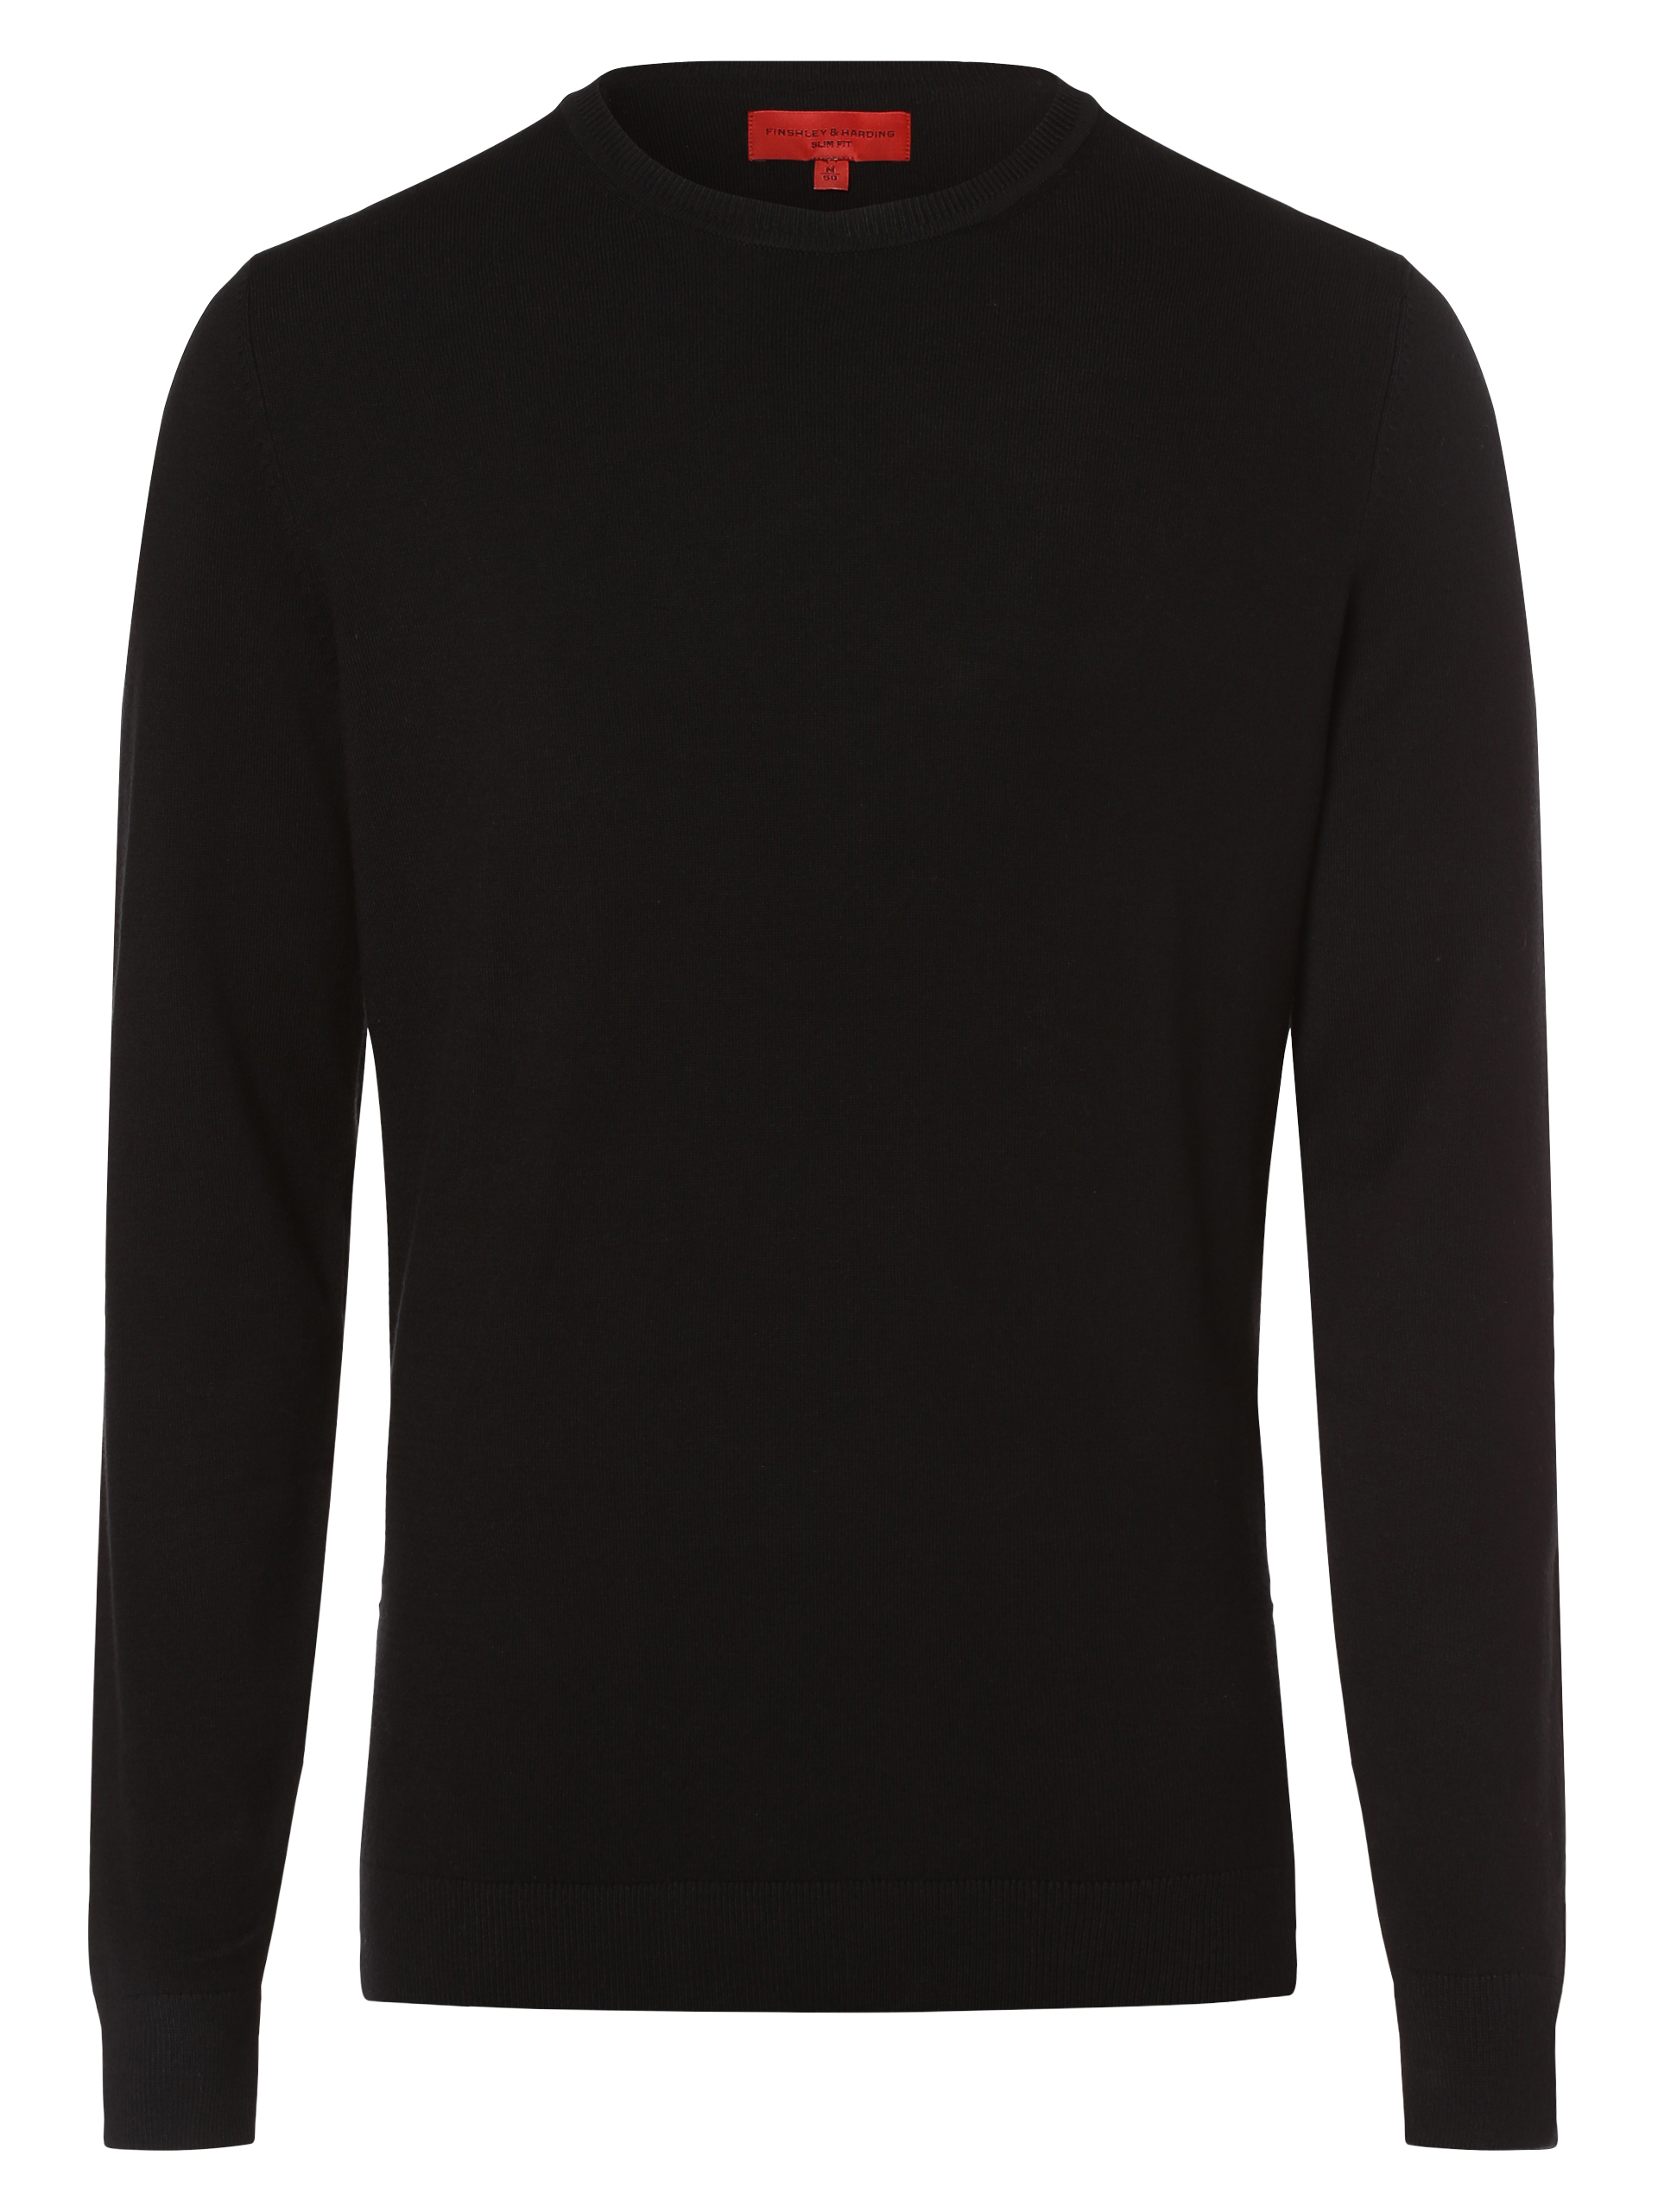 Пуловер Finshley & Harding, черный